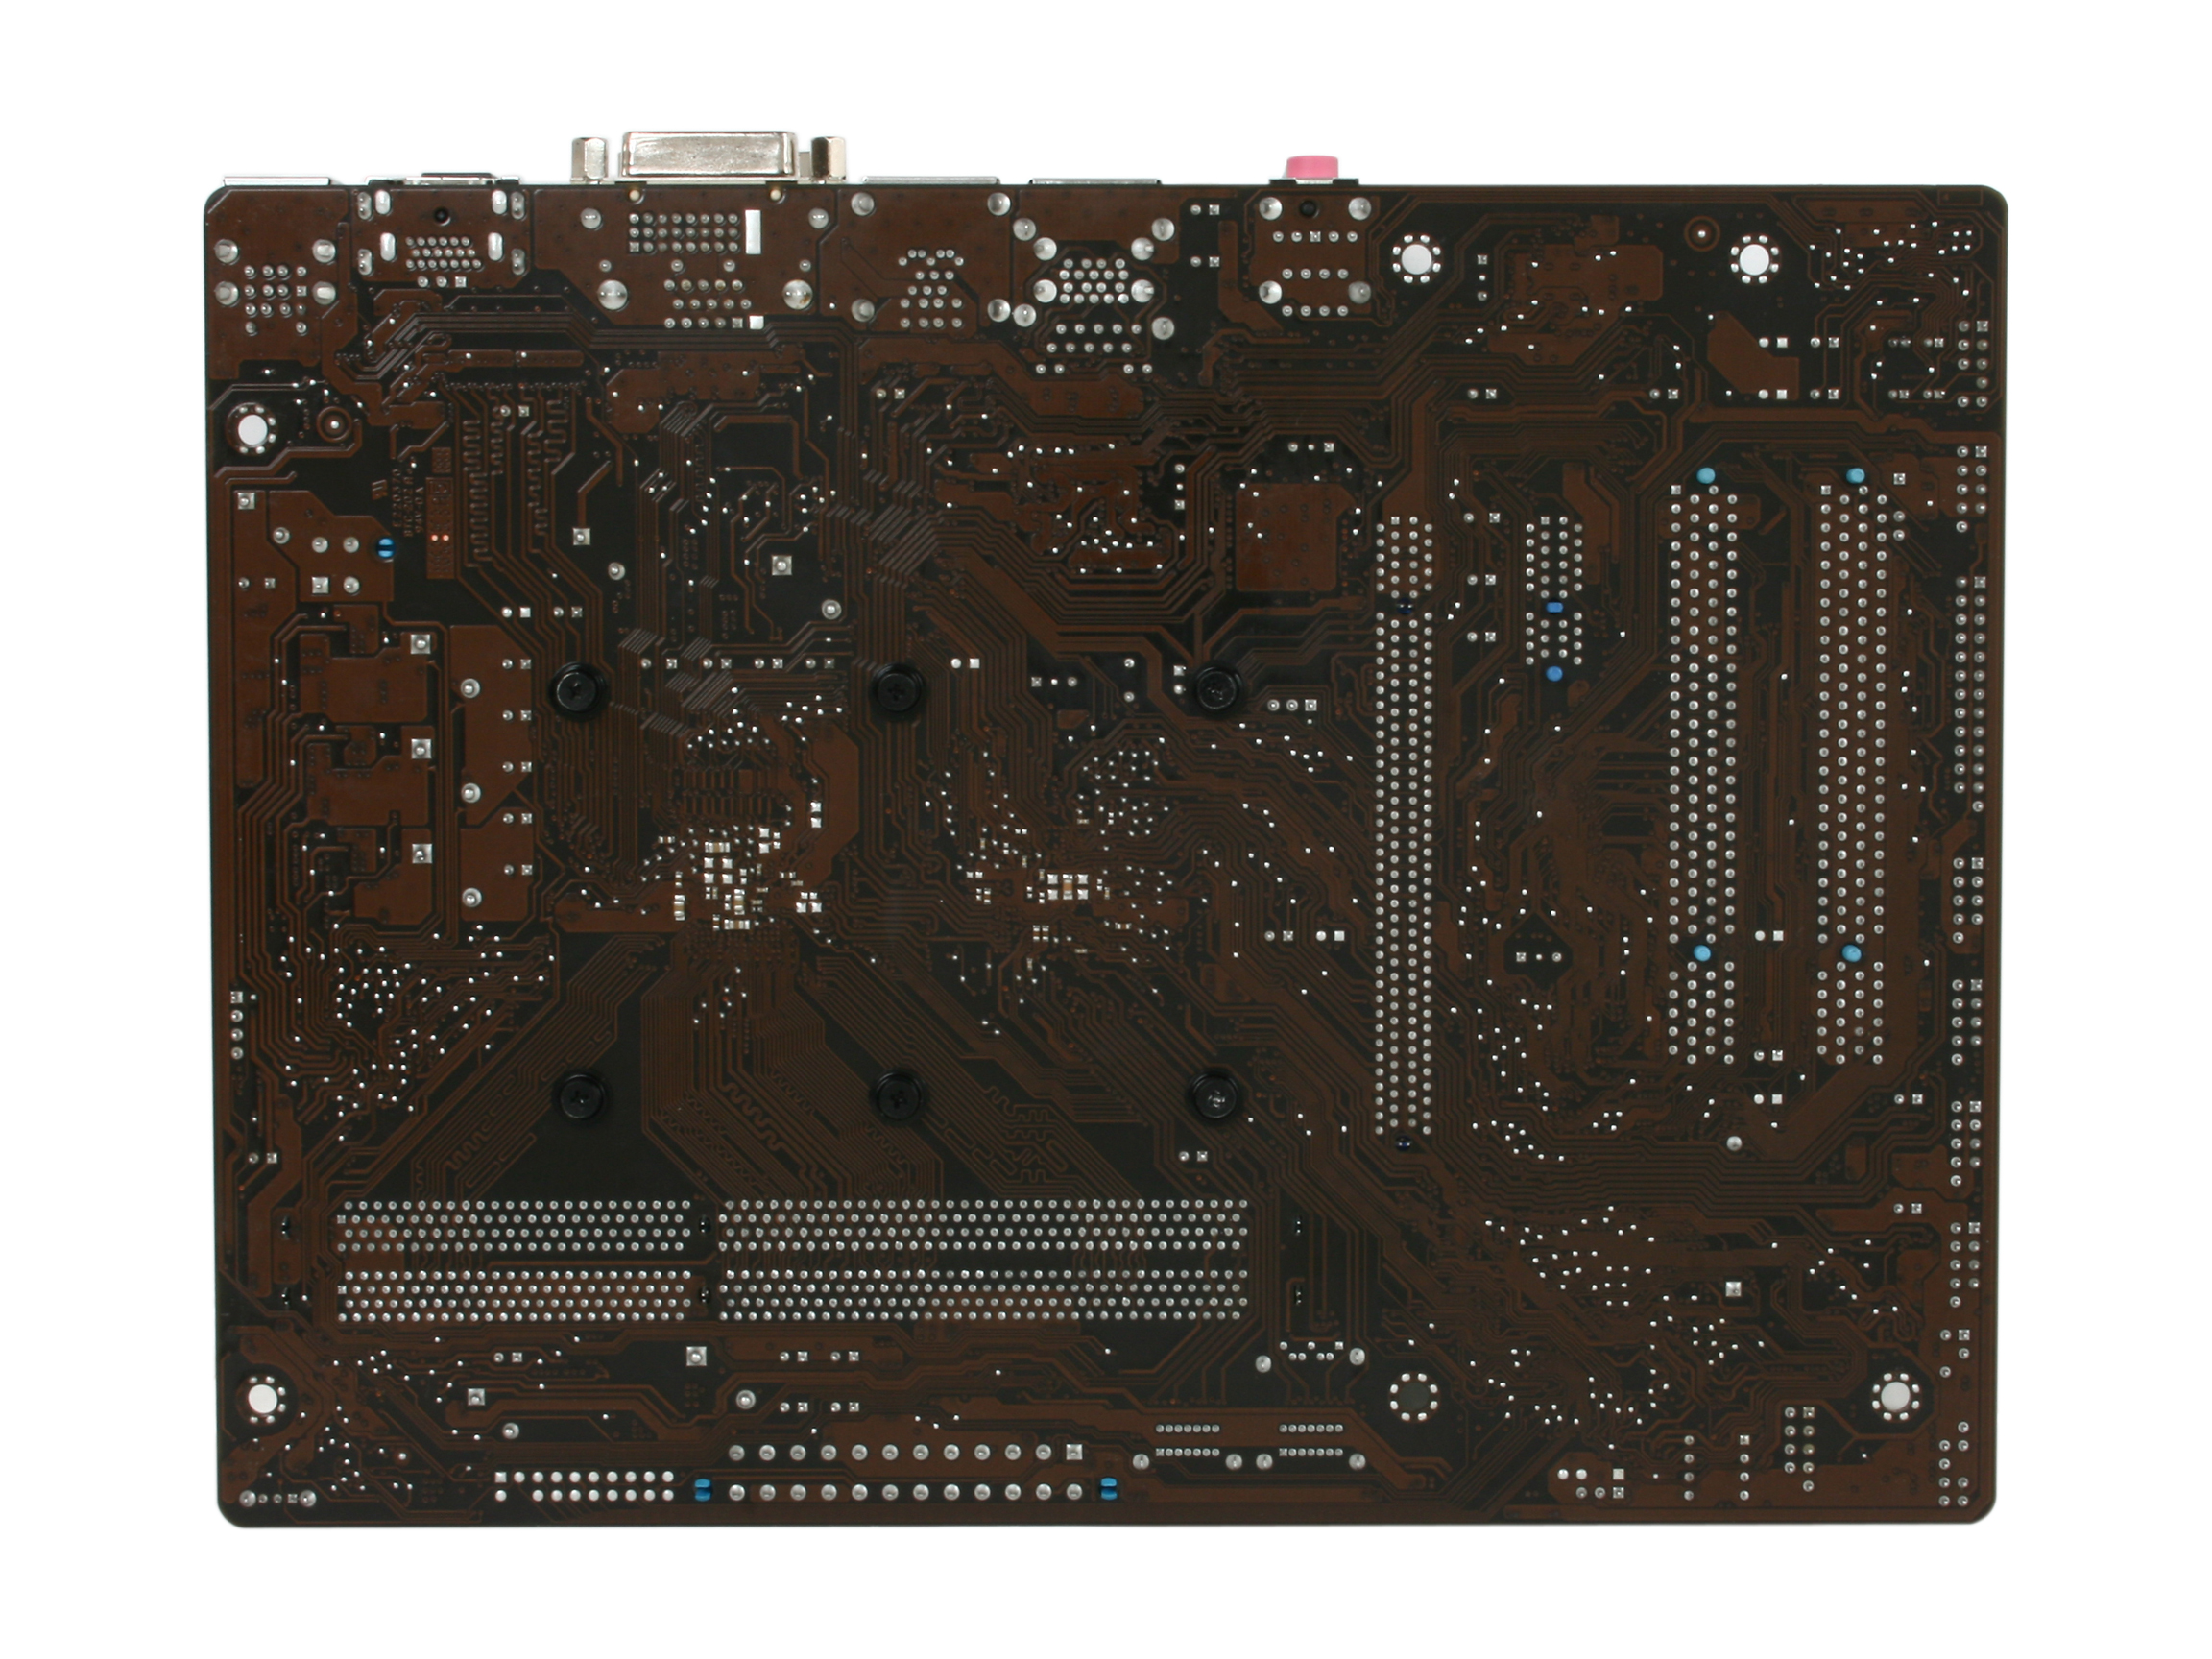 ASUS E35M1 M PRO Fusion AMD E 350 APU (1.6GHz, Dual Core) AMD Hudson M1 Micro ATX Motherboard/CPU Combo